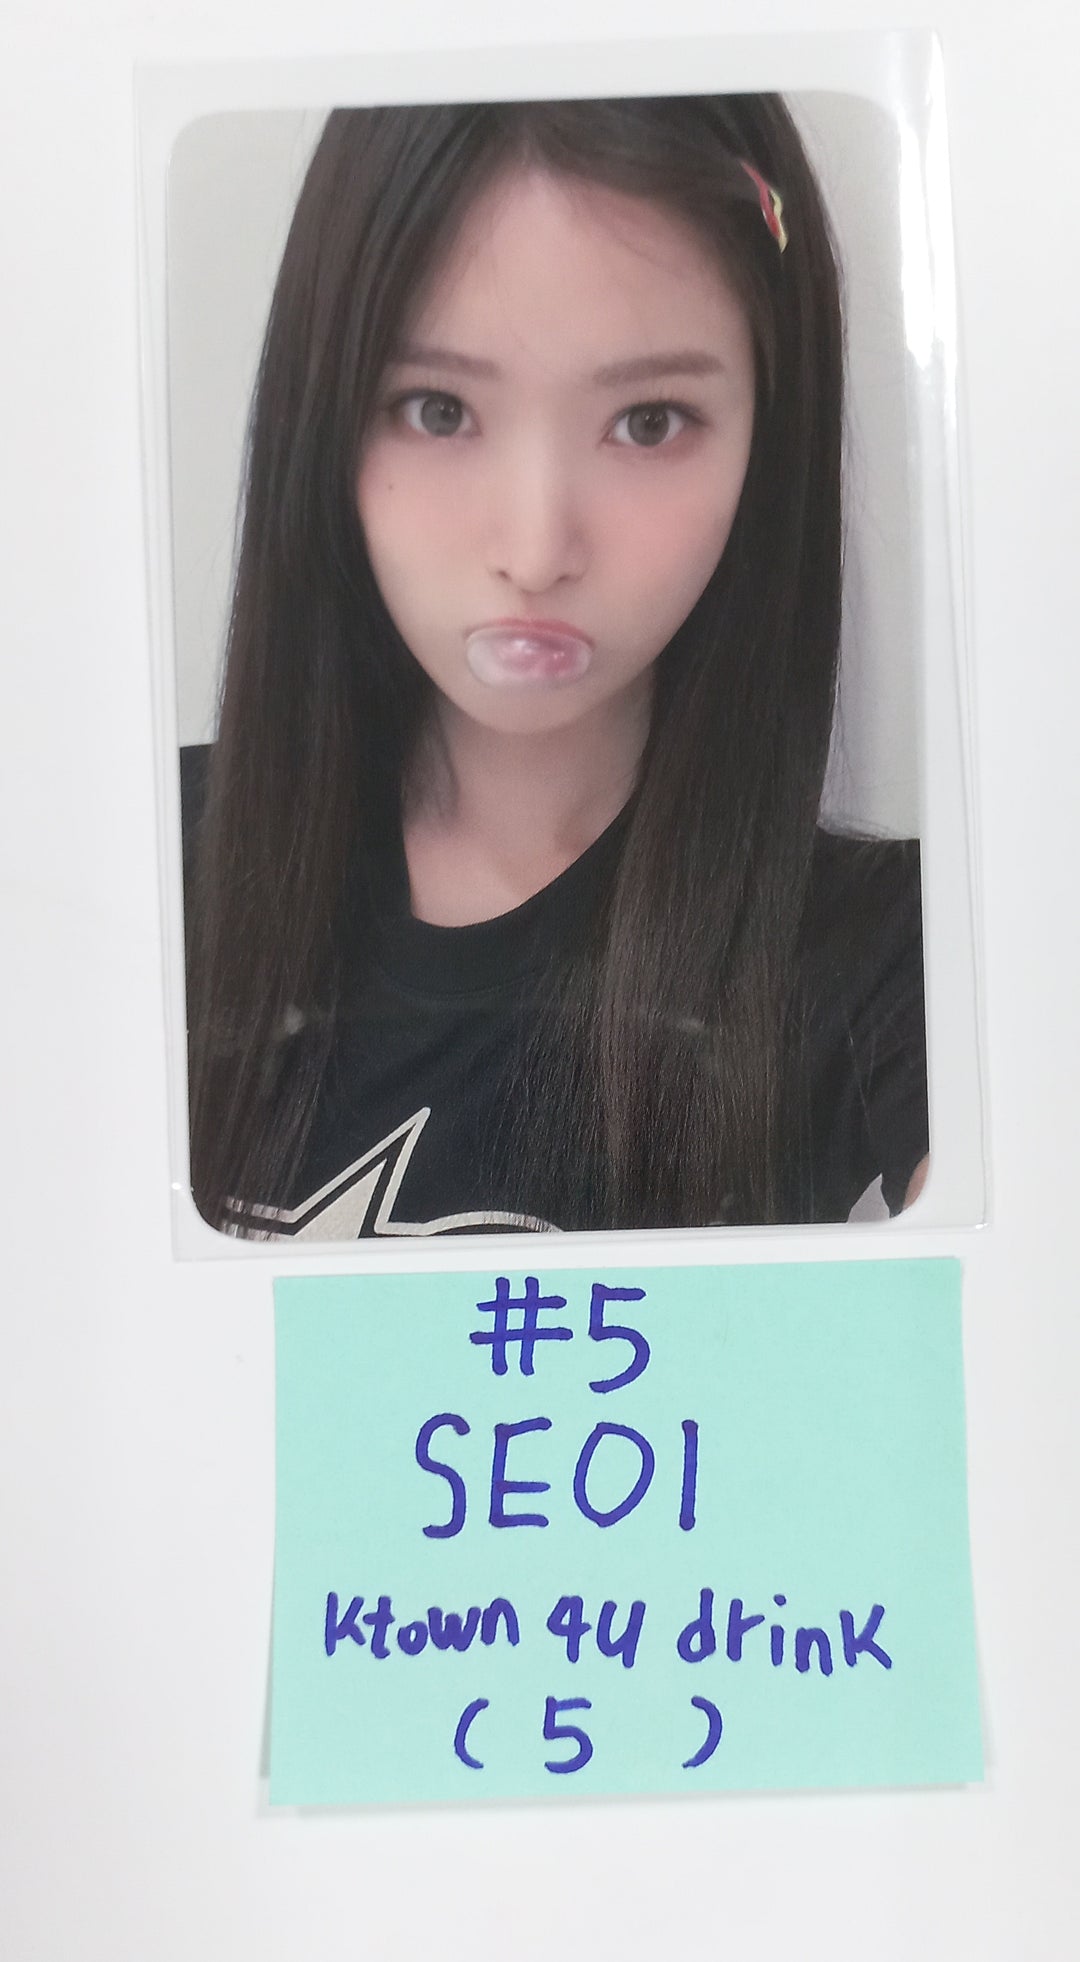 H1-KEY "Seoul Dreaming" - Ktown4U Lucky Draw & Drink Event Photocard [23.08.31]